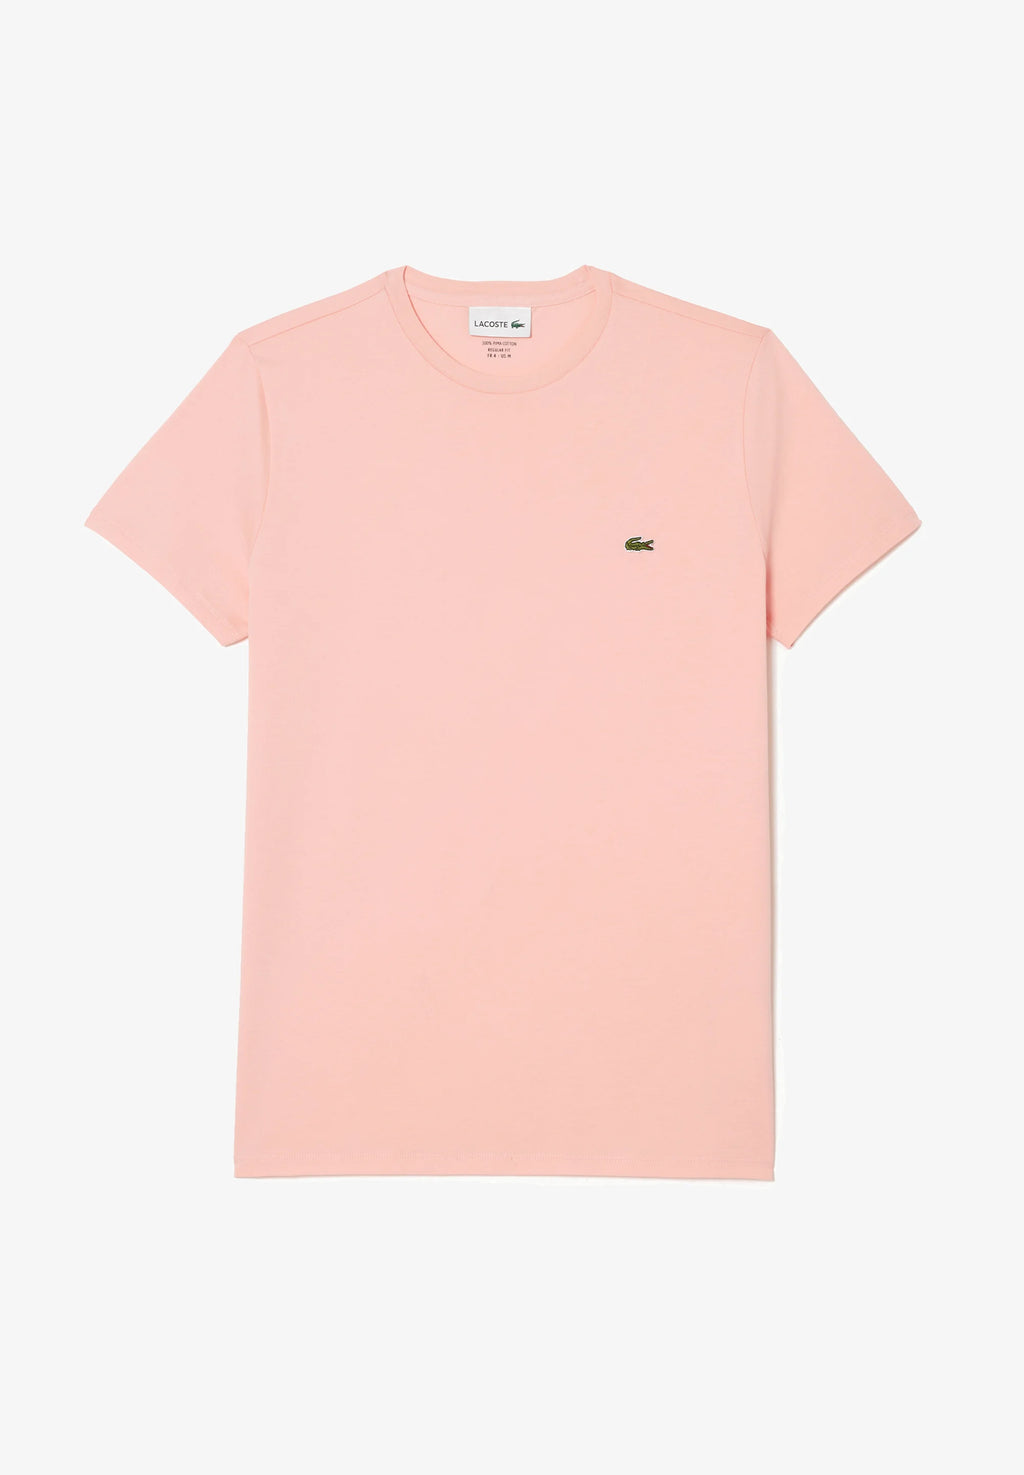 T-shirt Lacoste rose pour homme I Georgespaul